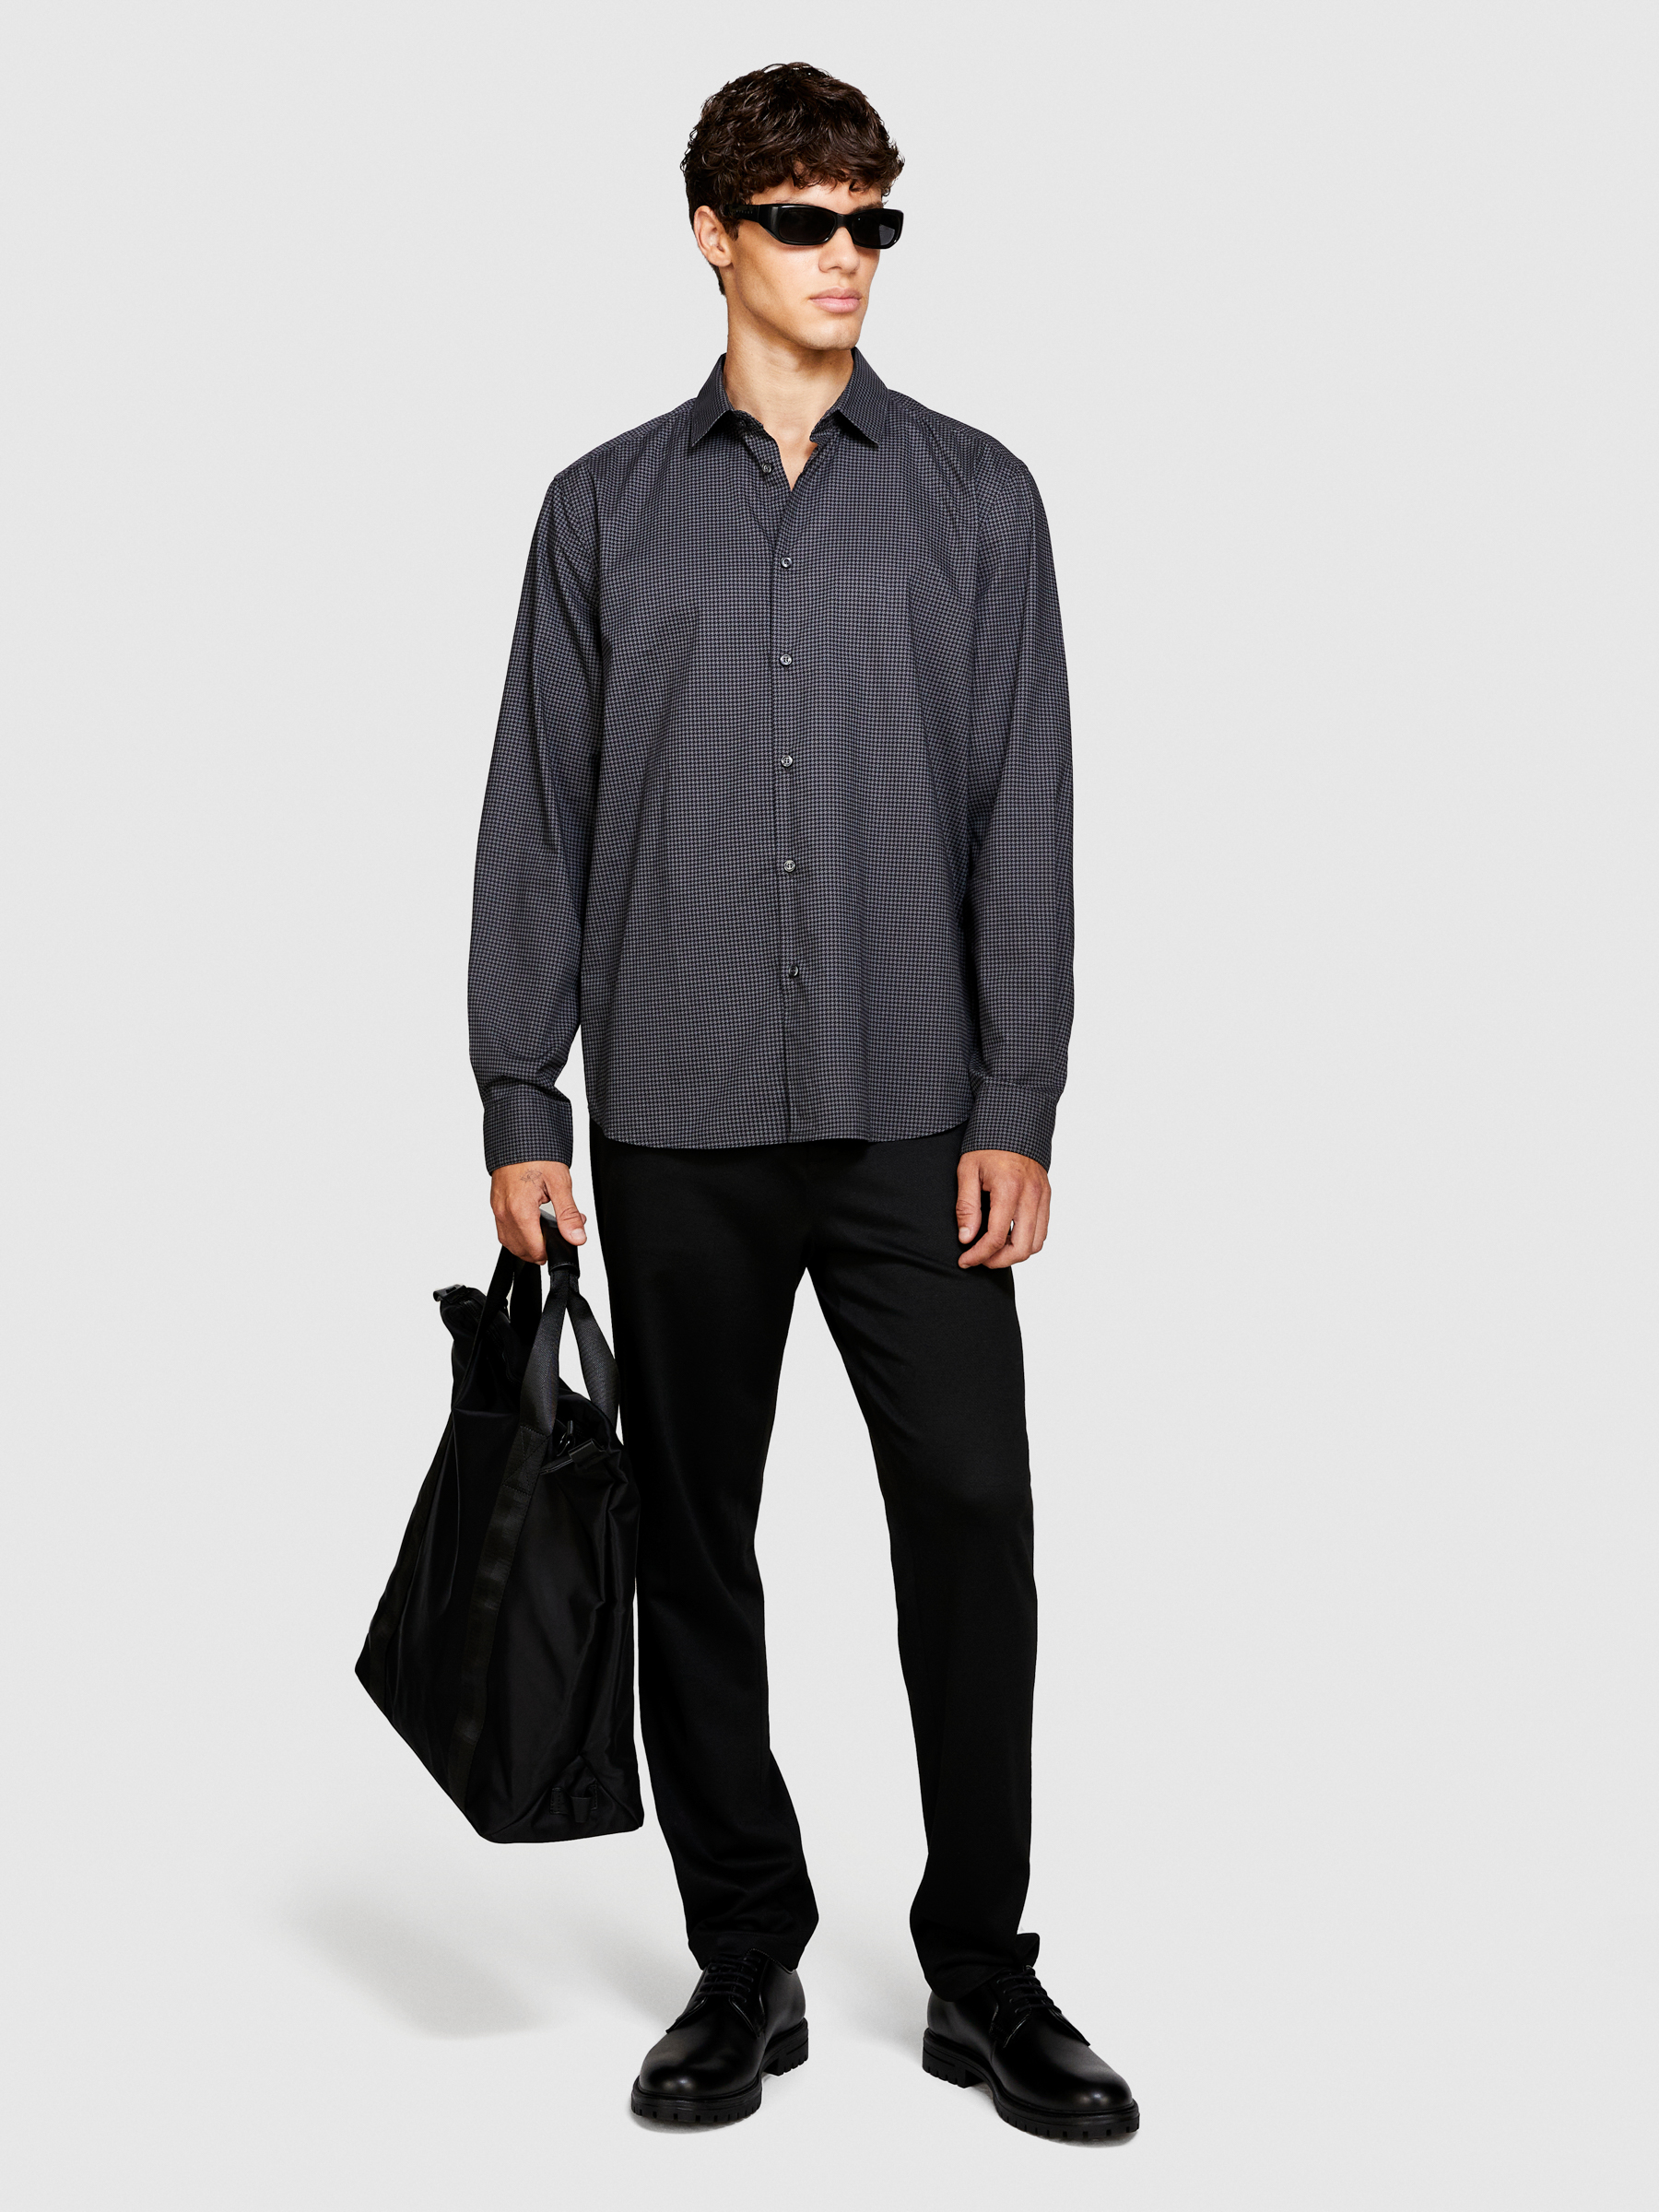 Sisley - Printed Shirt, Man, Dark Gray, Size: EL